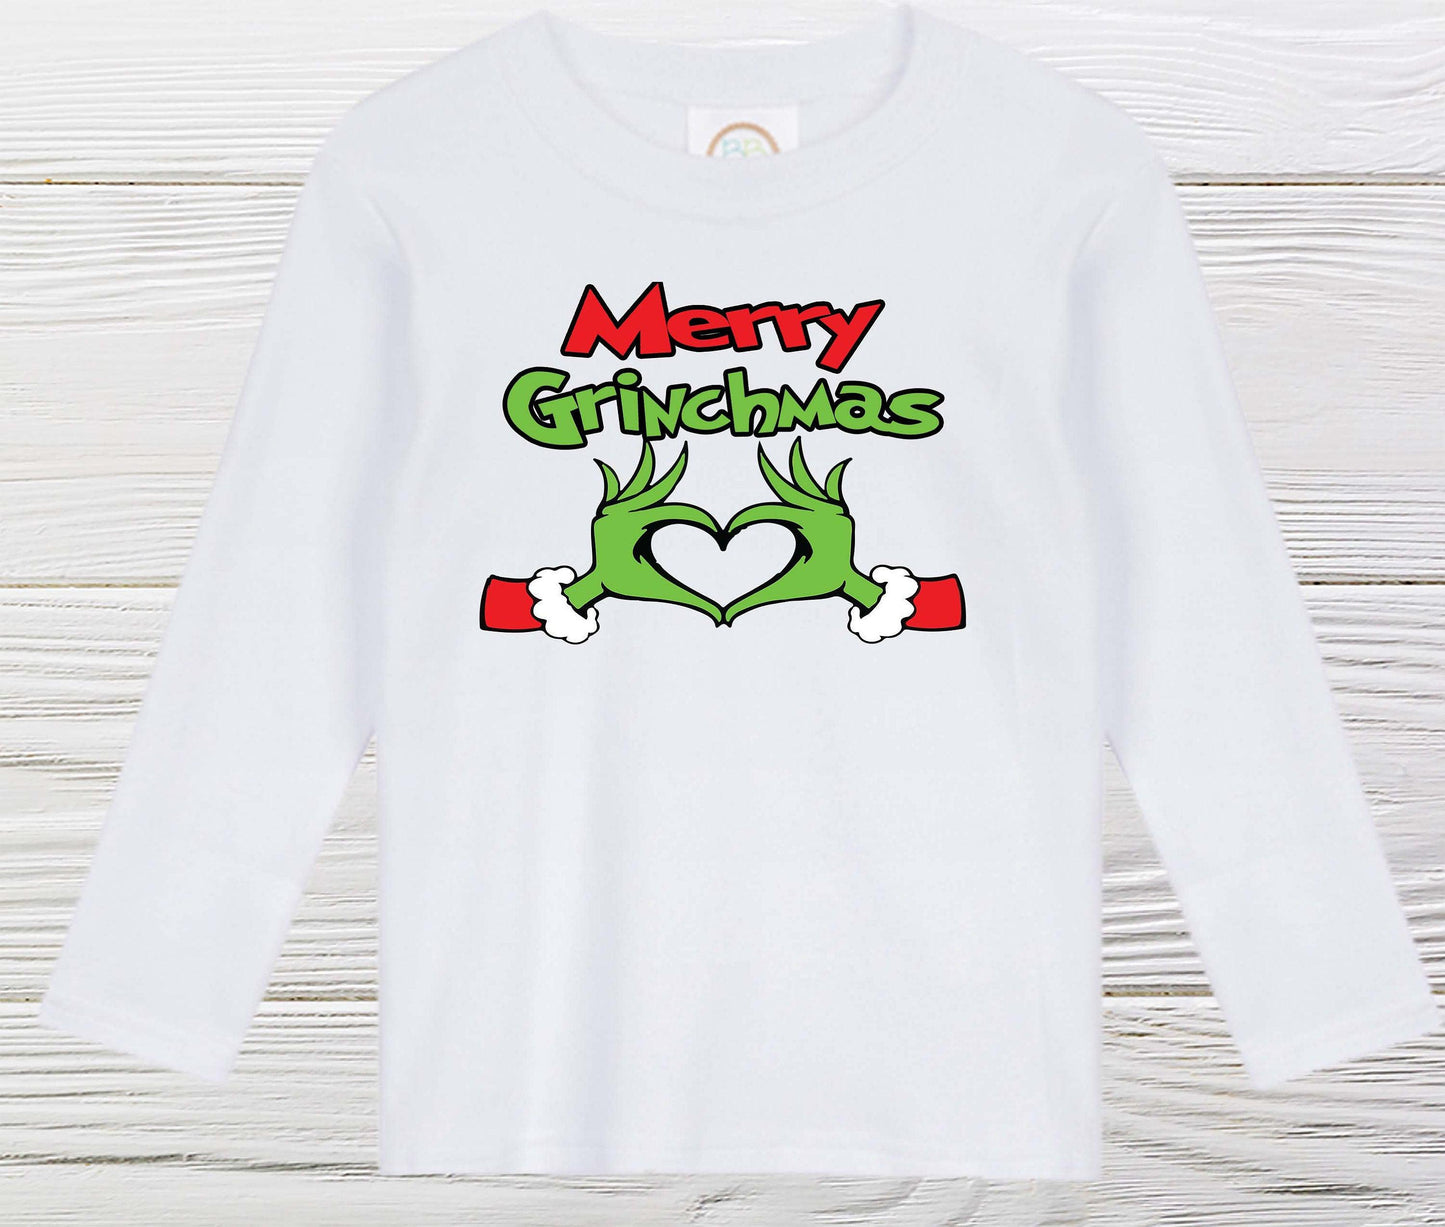 Merry Grinchmas shirt